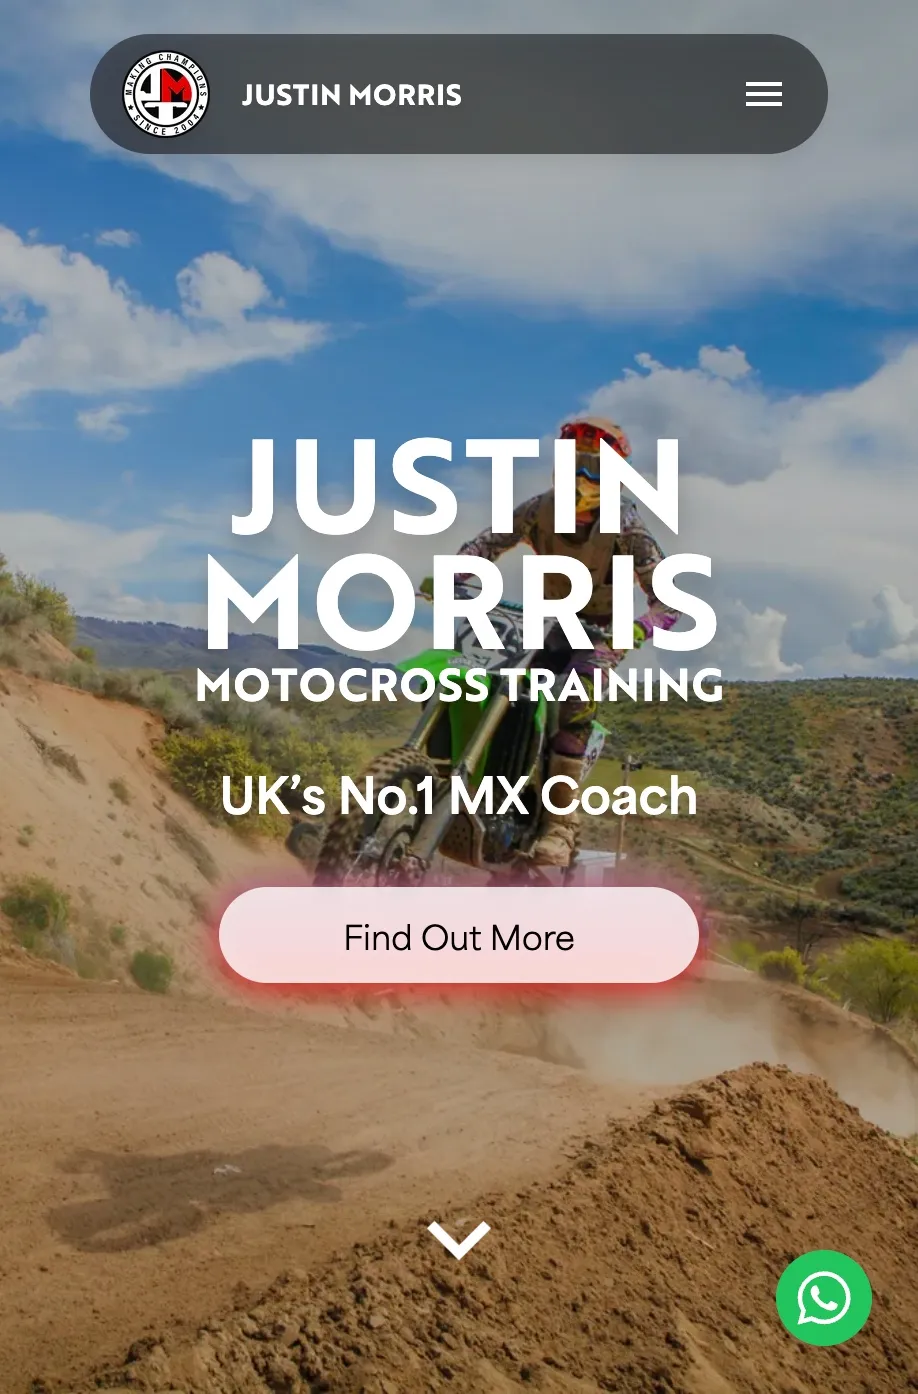 Justin Morris Motocross Website Screenshot